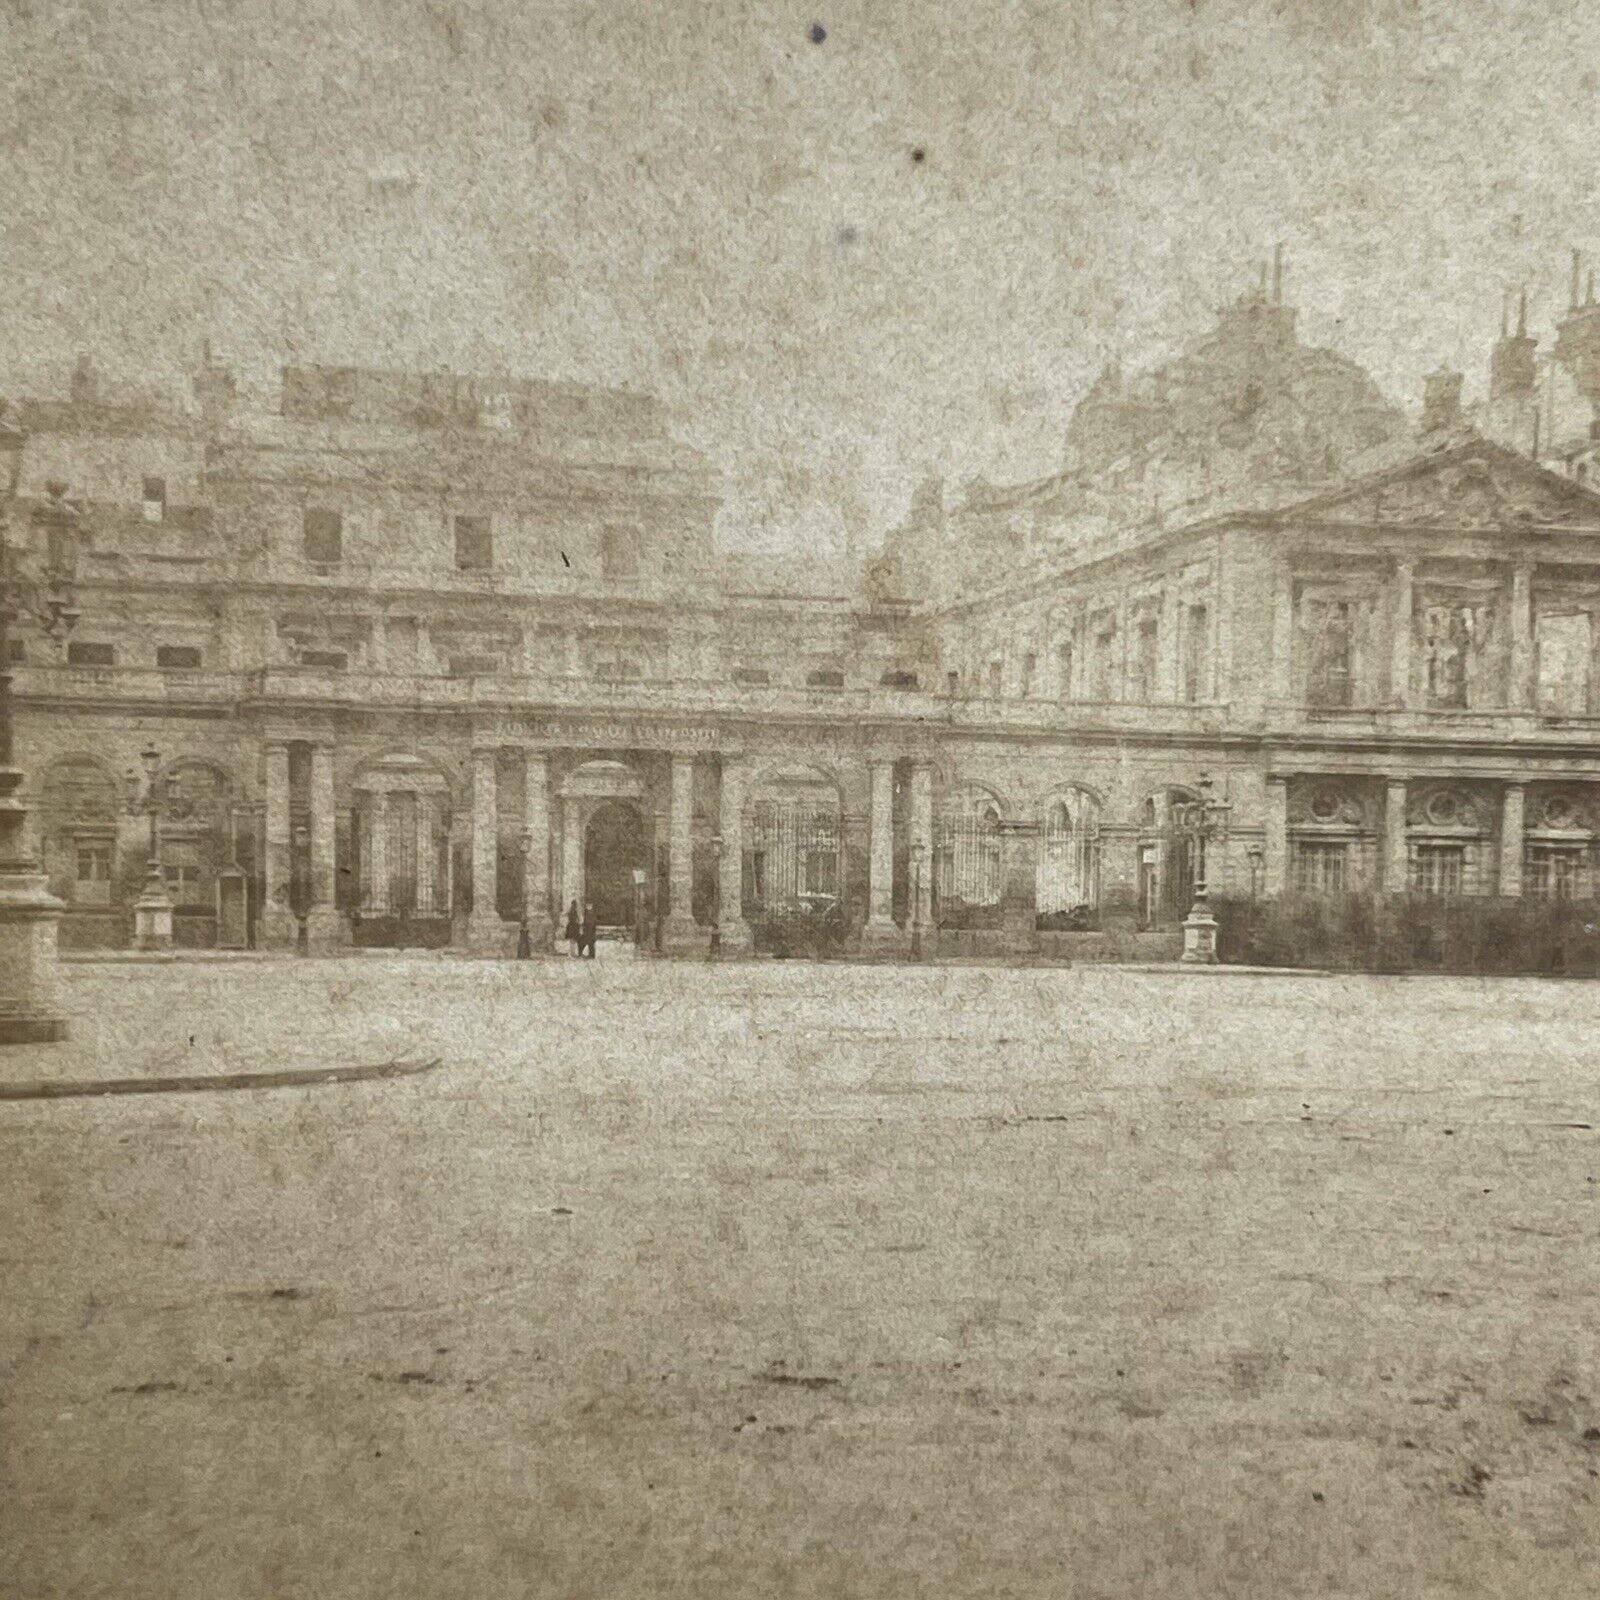 Antique 1875 Palais Royale Royal Palace Paris France Stereoview Photo Card P1860